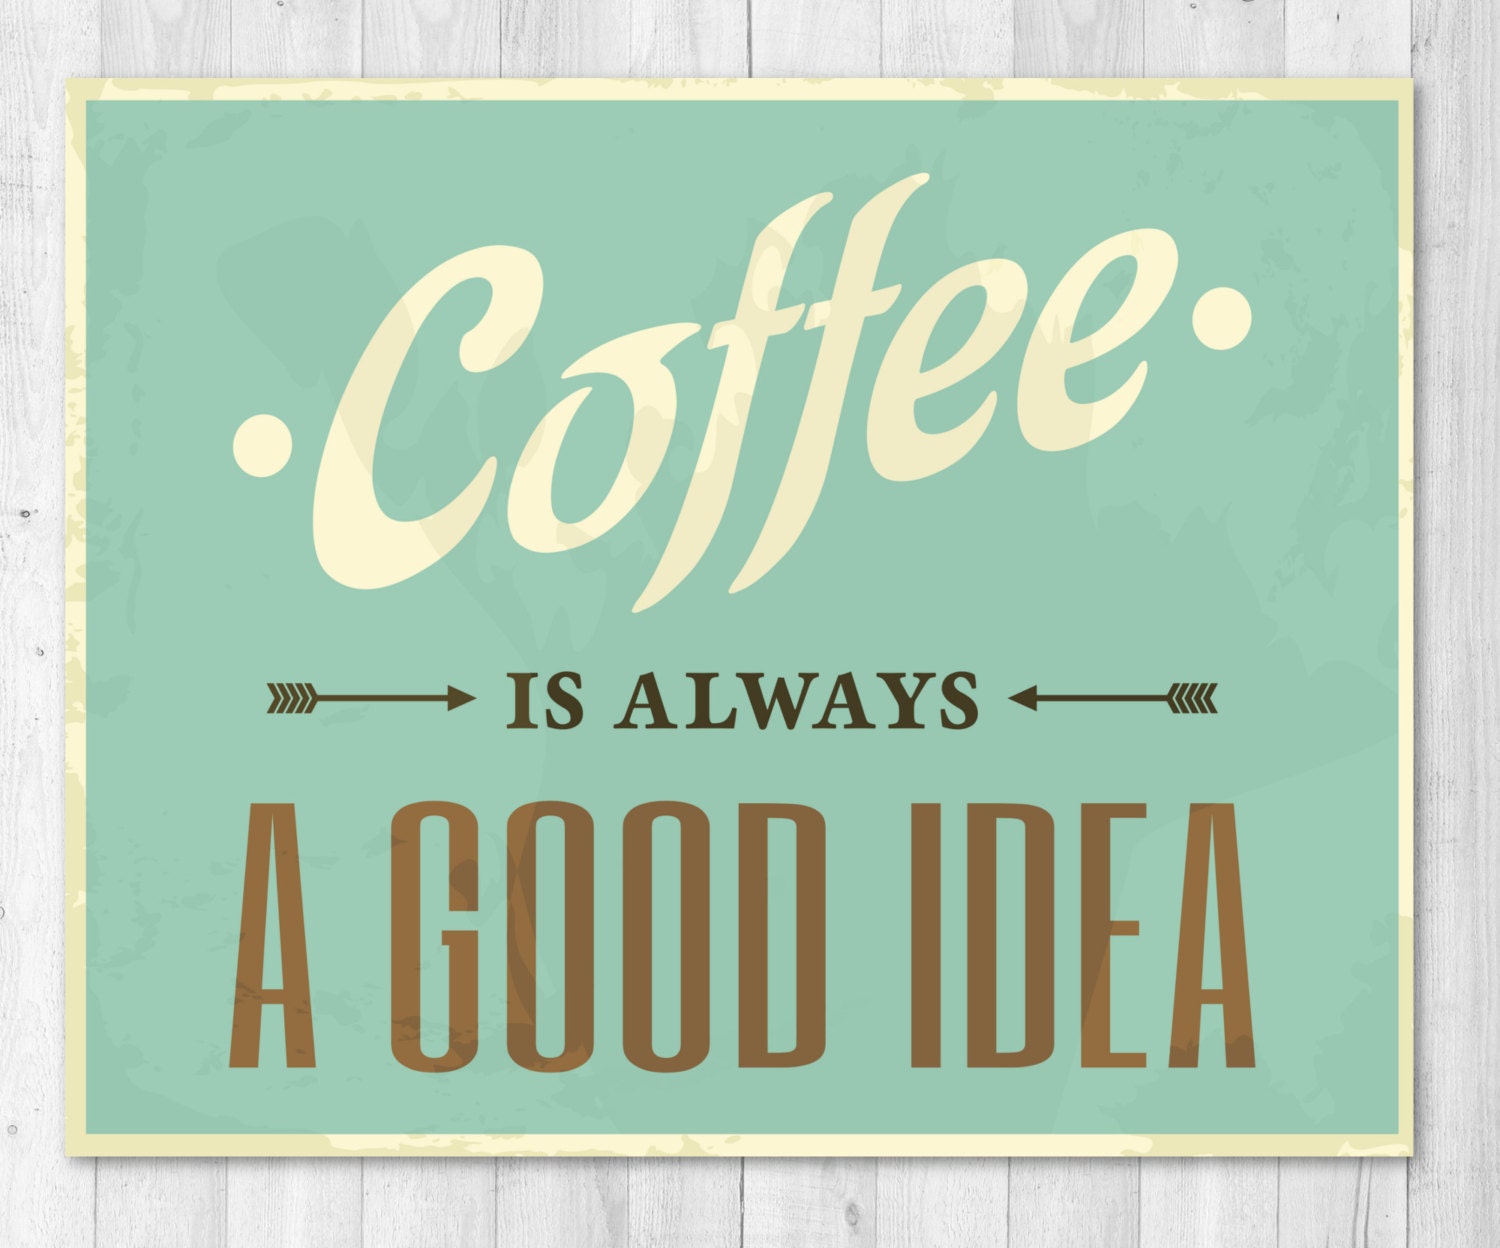 One more coffee. Coffee always a good idea. Coffee is always a good idea. Постер кофе меню. Need more Coffee обои на телефон.